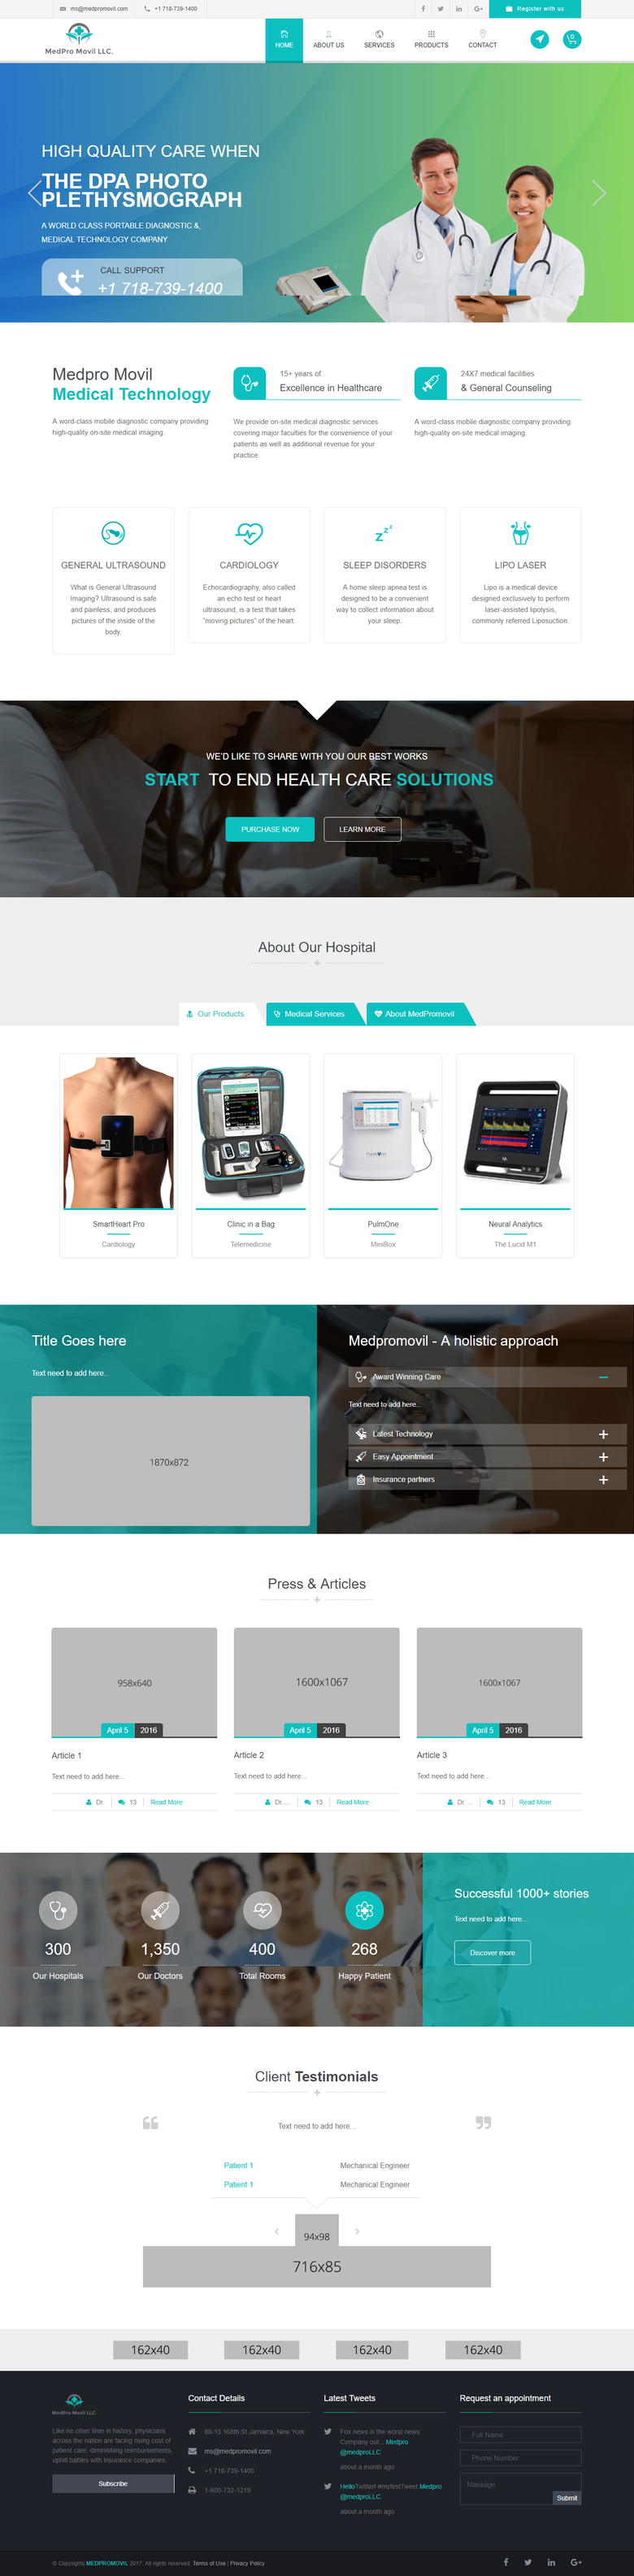 Medical Devices Website